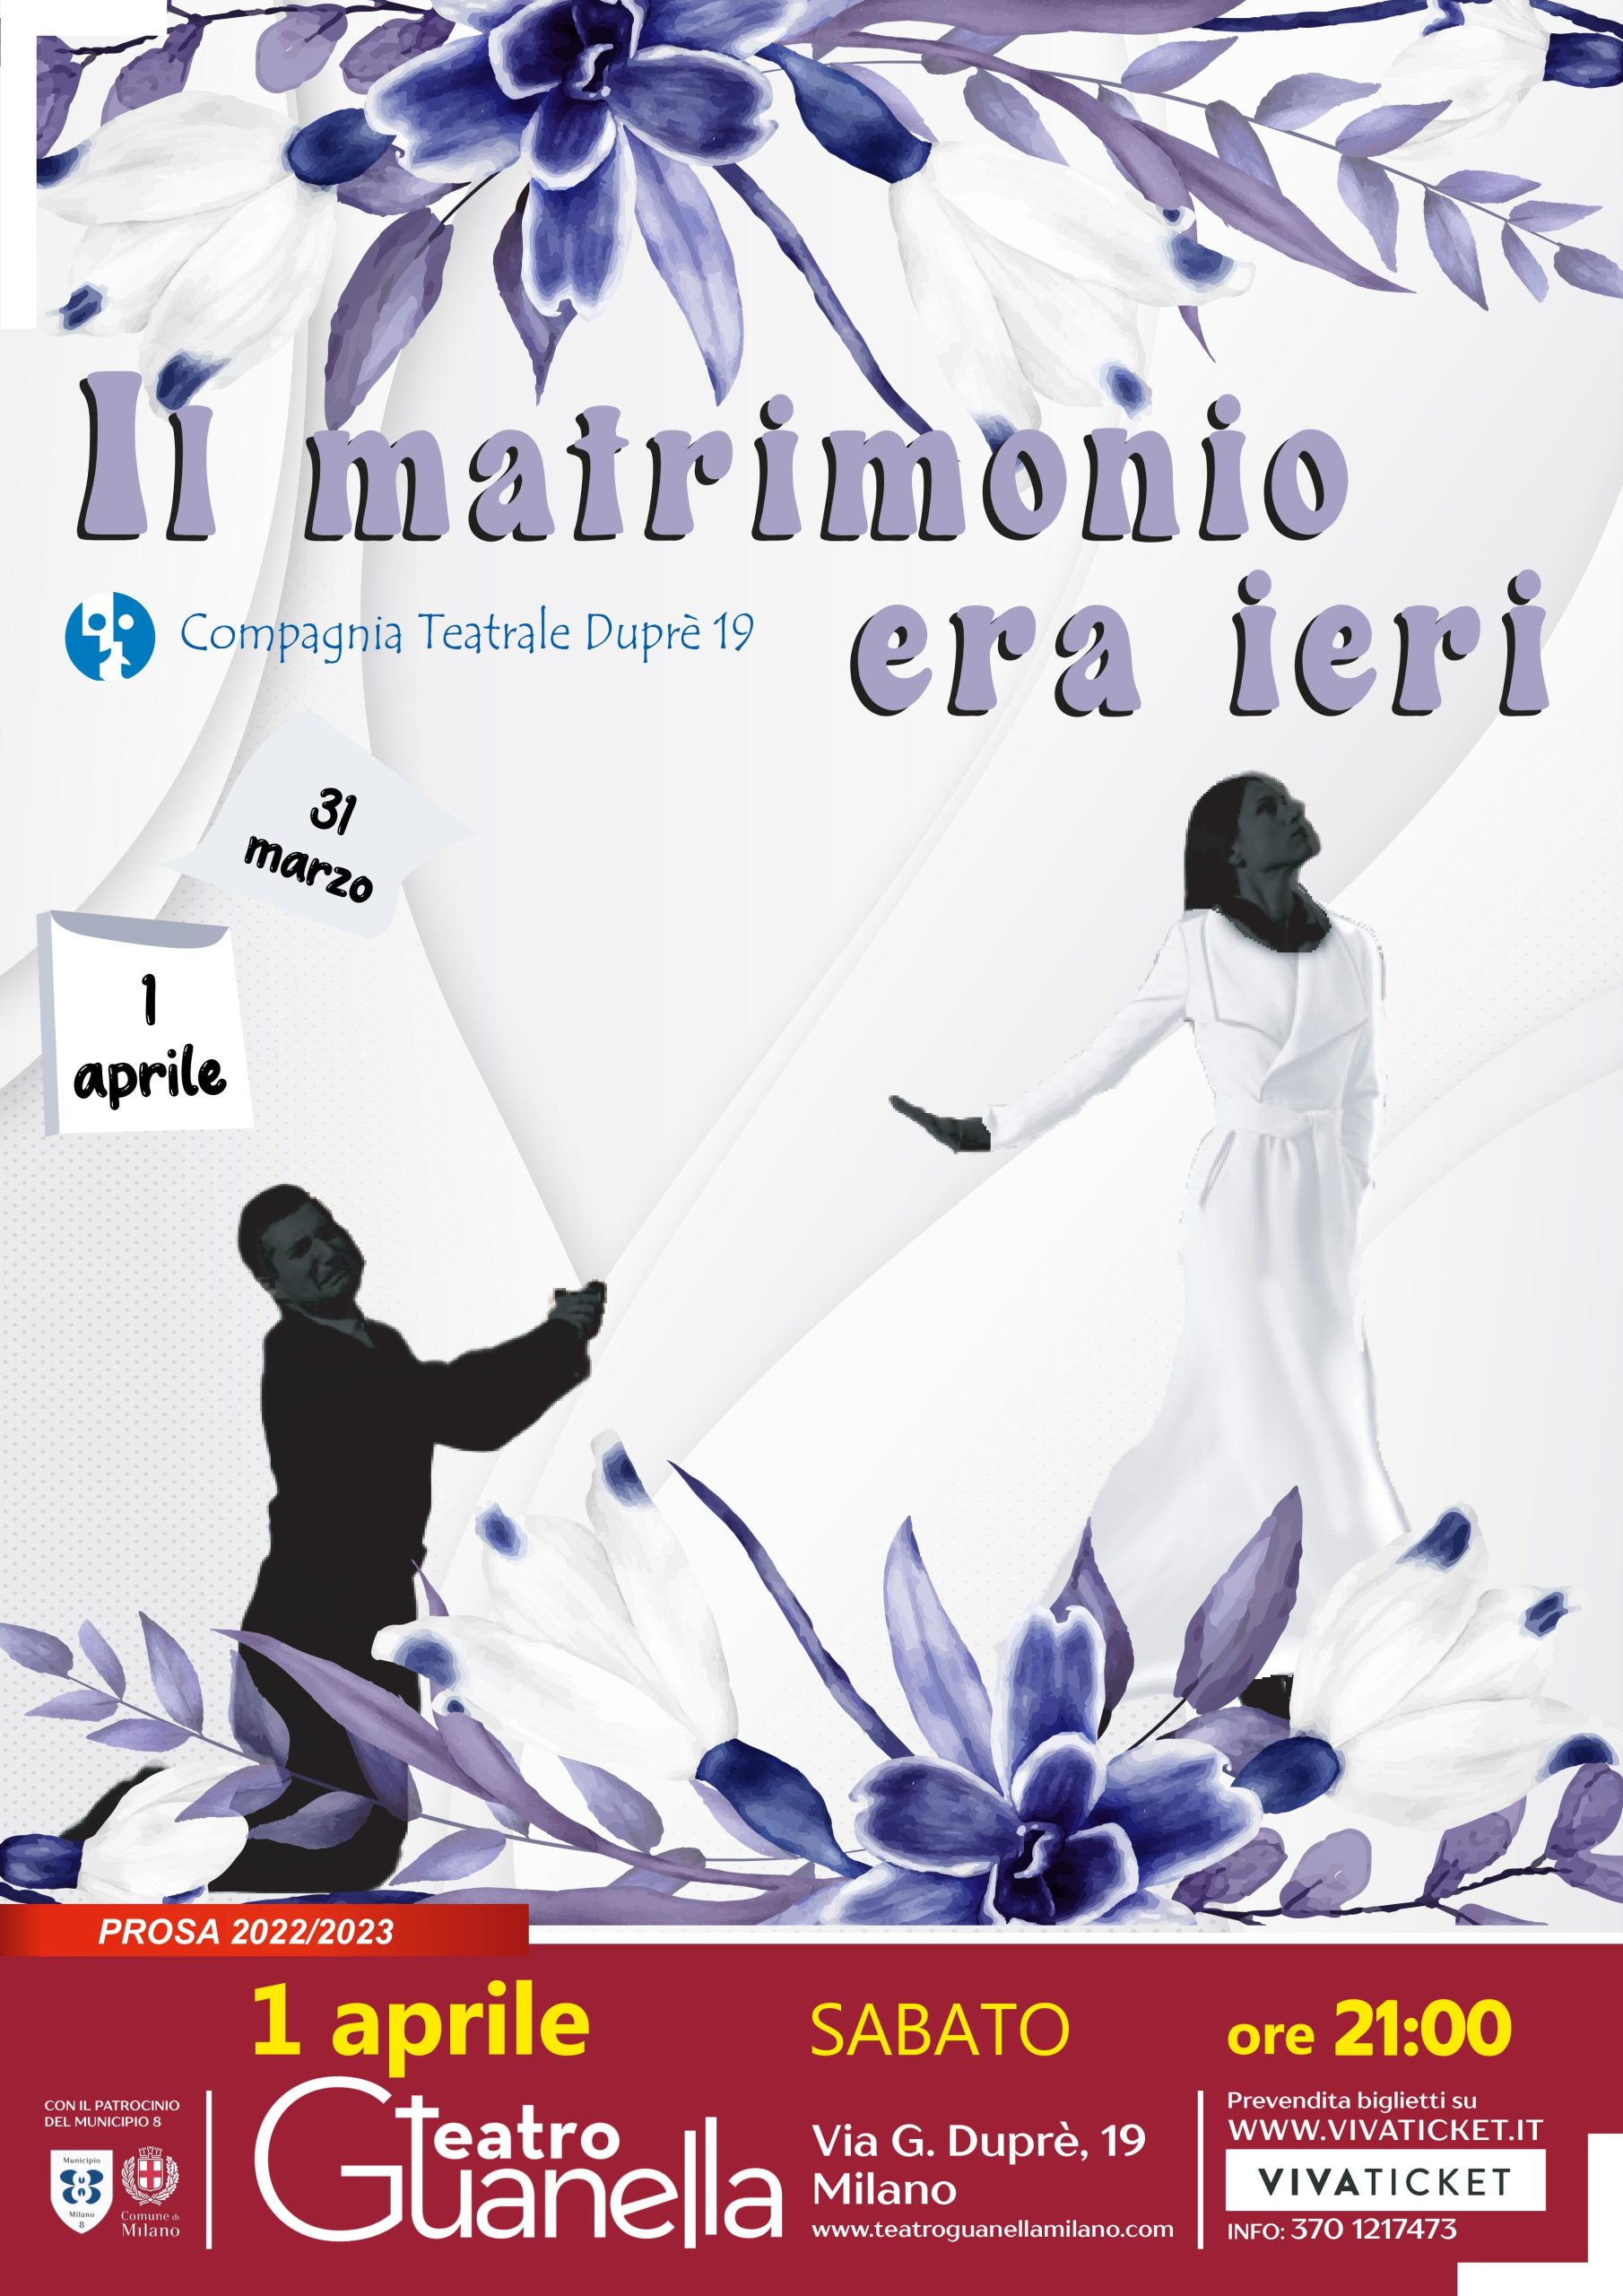 IL MATRIMONIO ERA IERI – Compagnia Teatrale Duprè 19